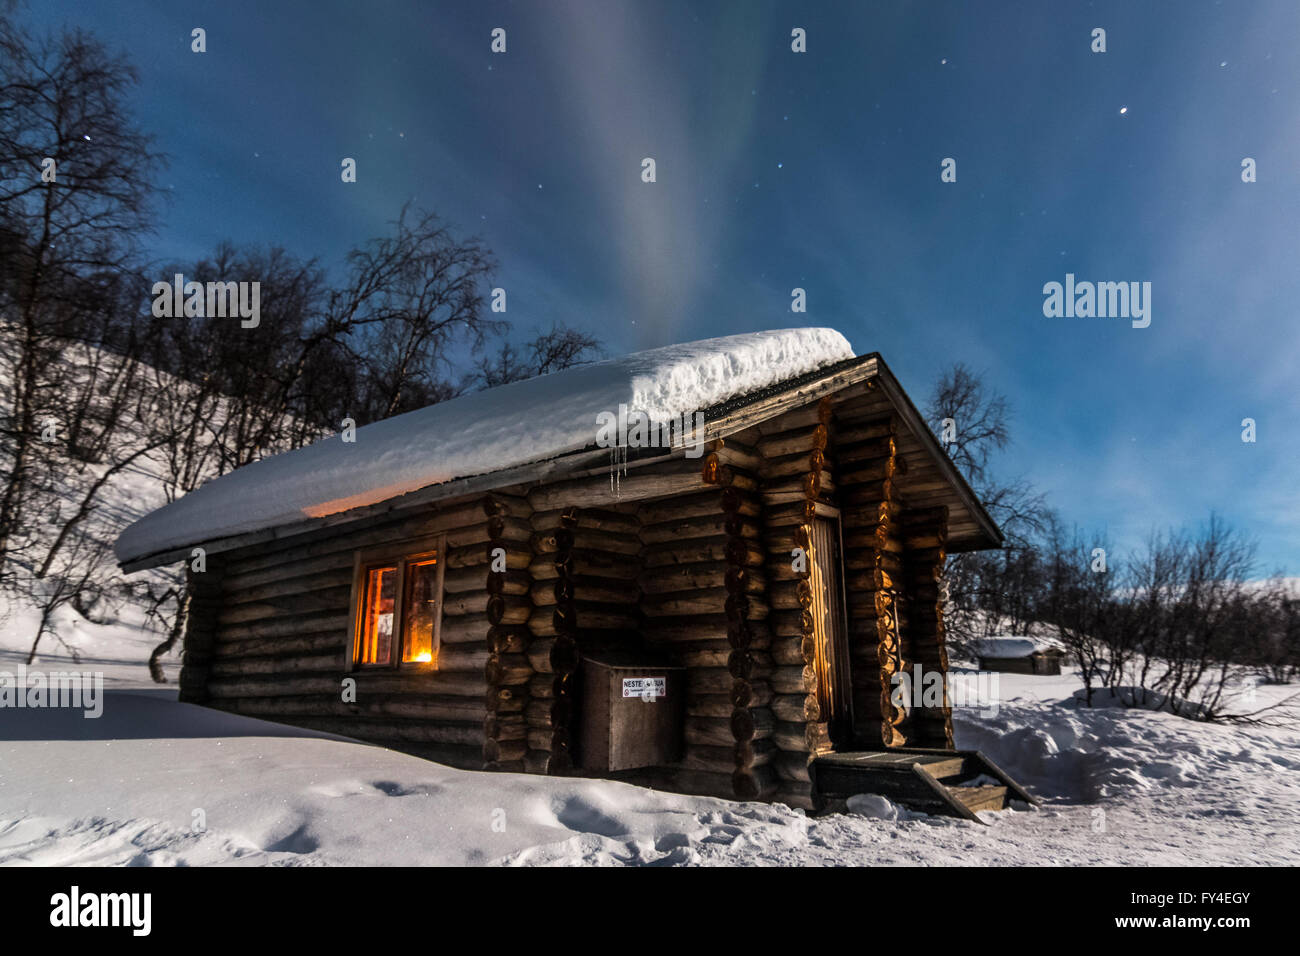 Ruktajärvi open wilderness hut in the moonlight. Stock Photo